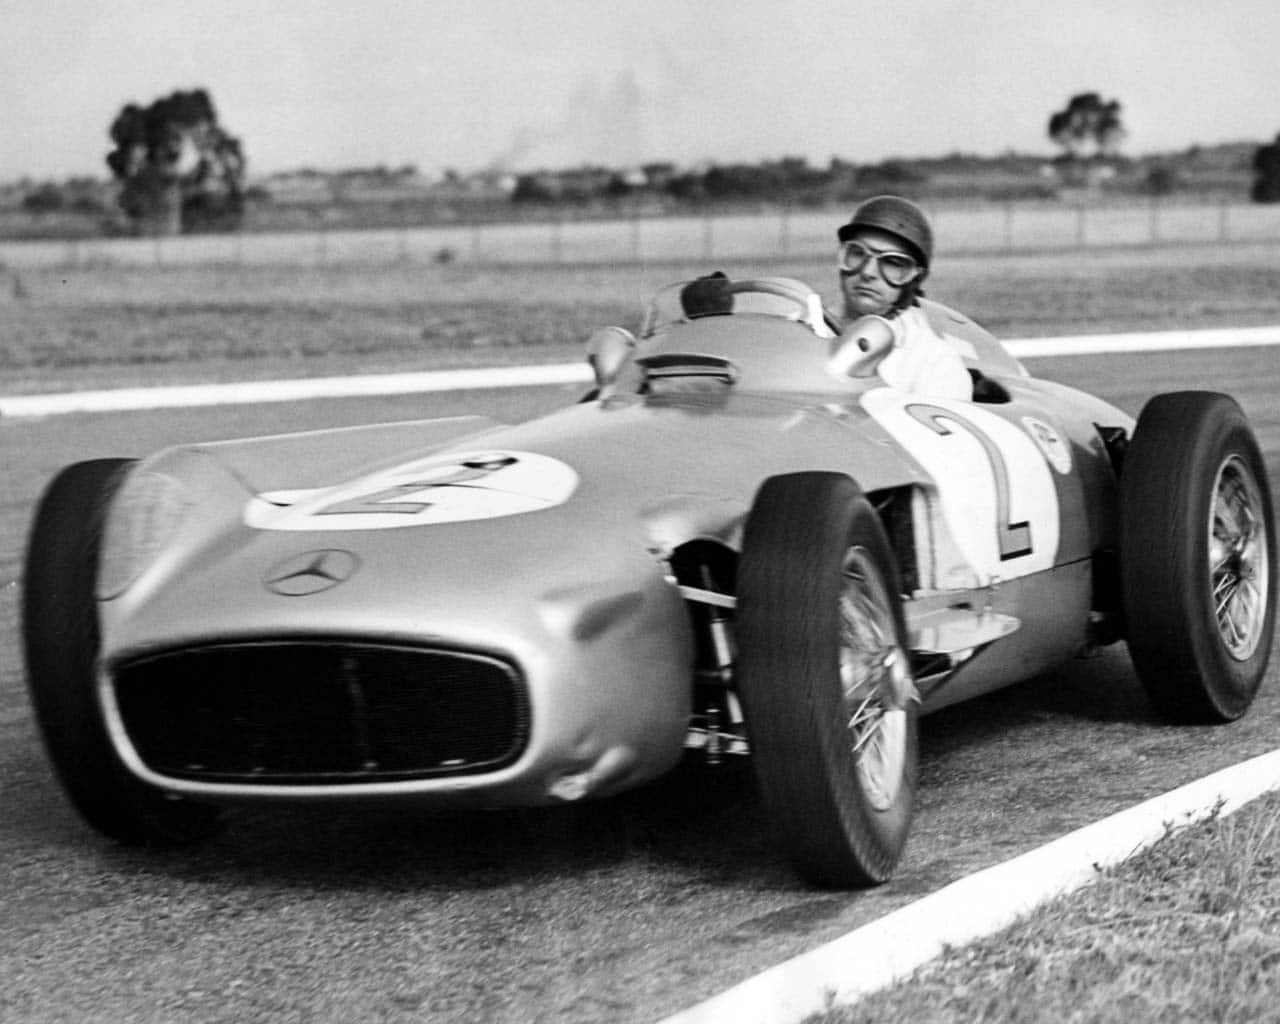 Día del Piloto, en honor a Juan Manuel Fangio